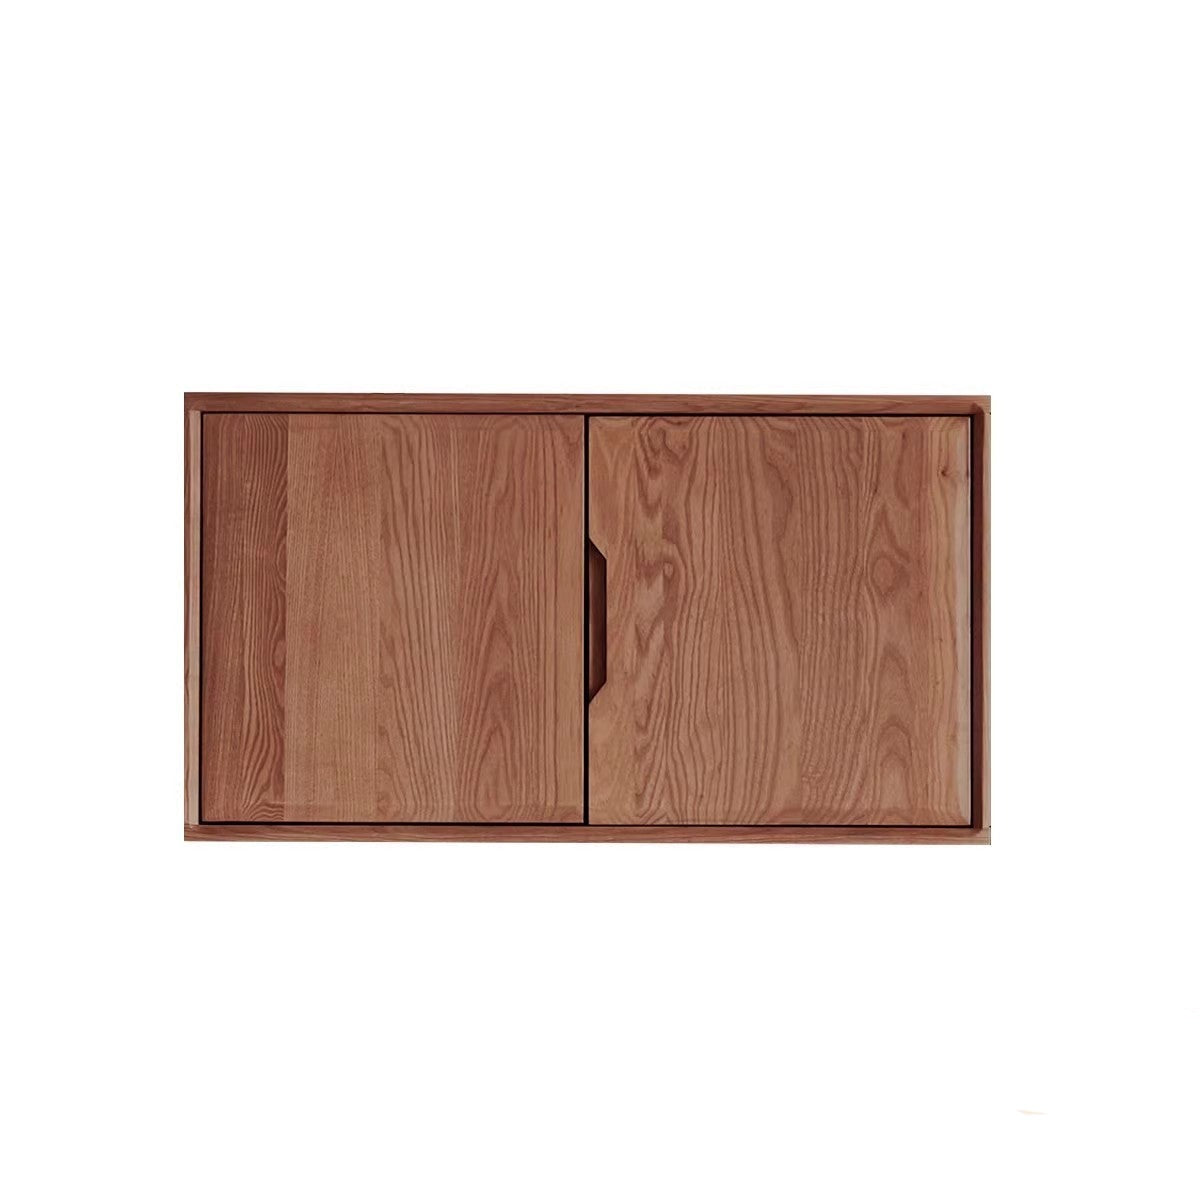 Ash solid wood wardrobe modern minimalist "